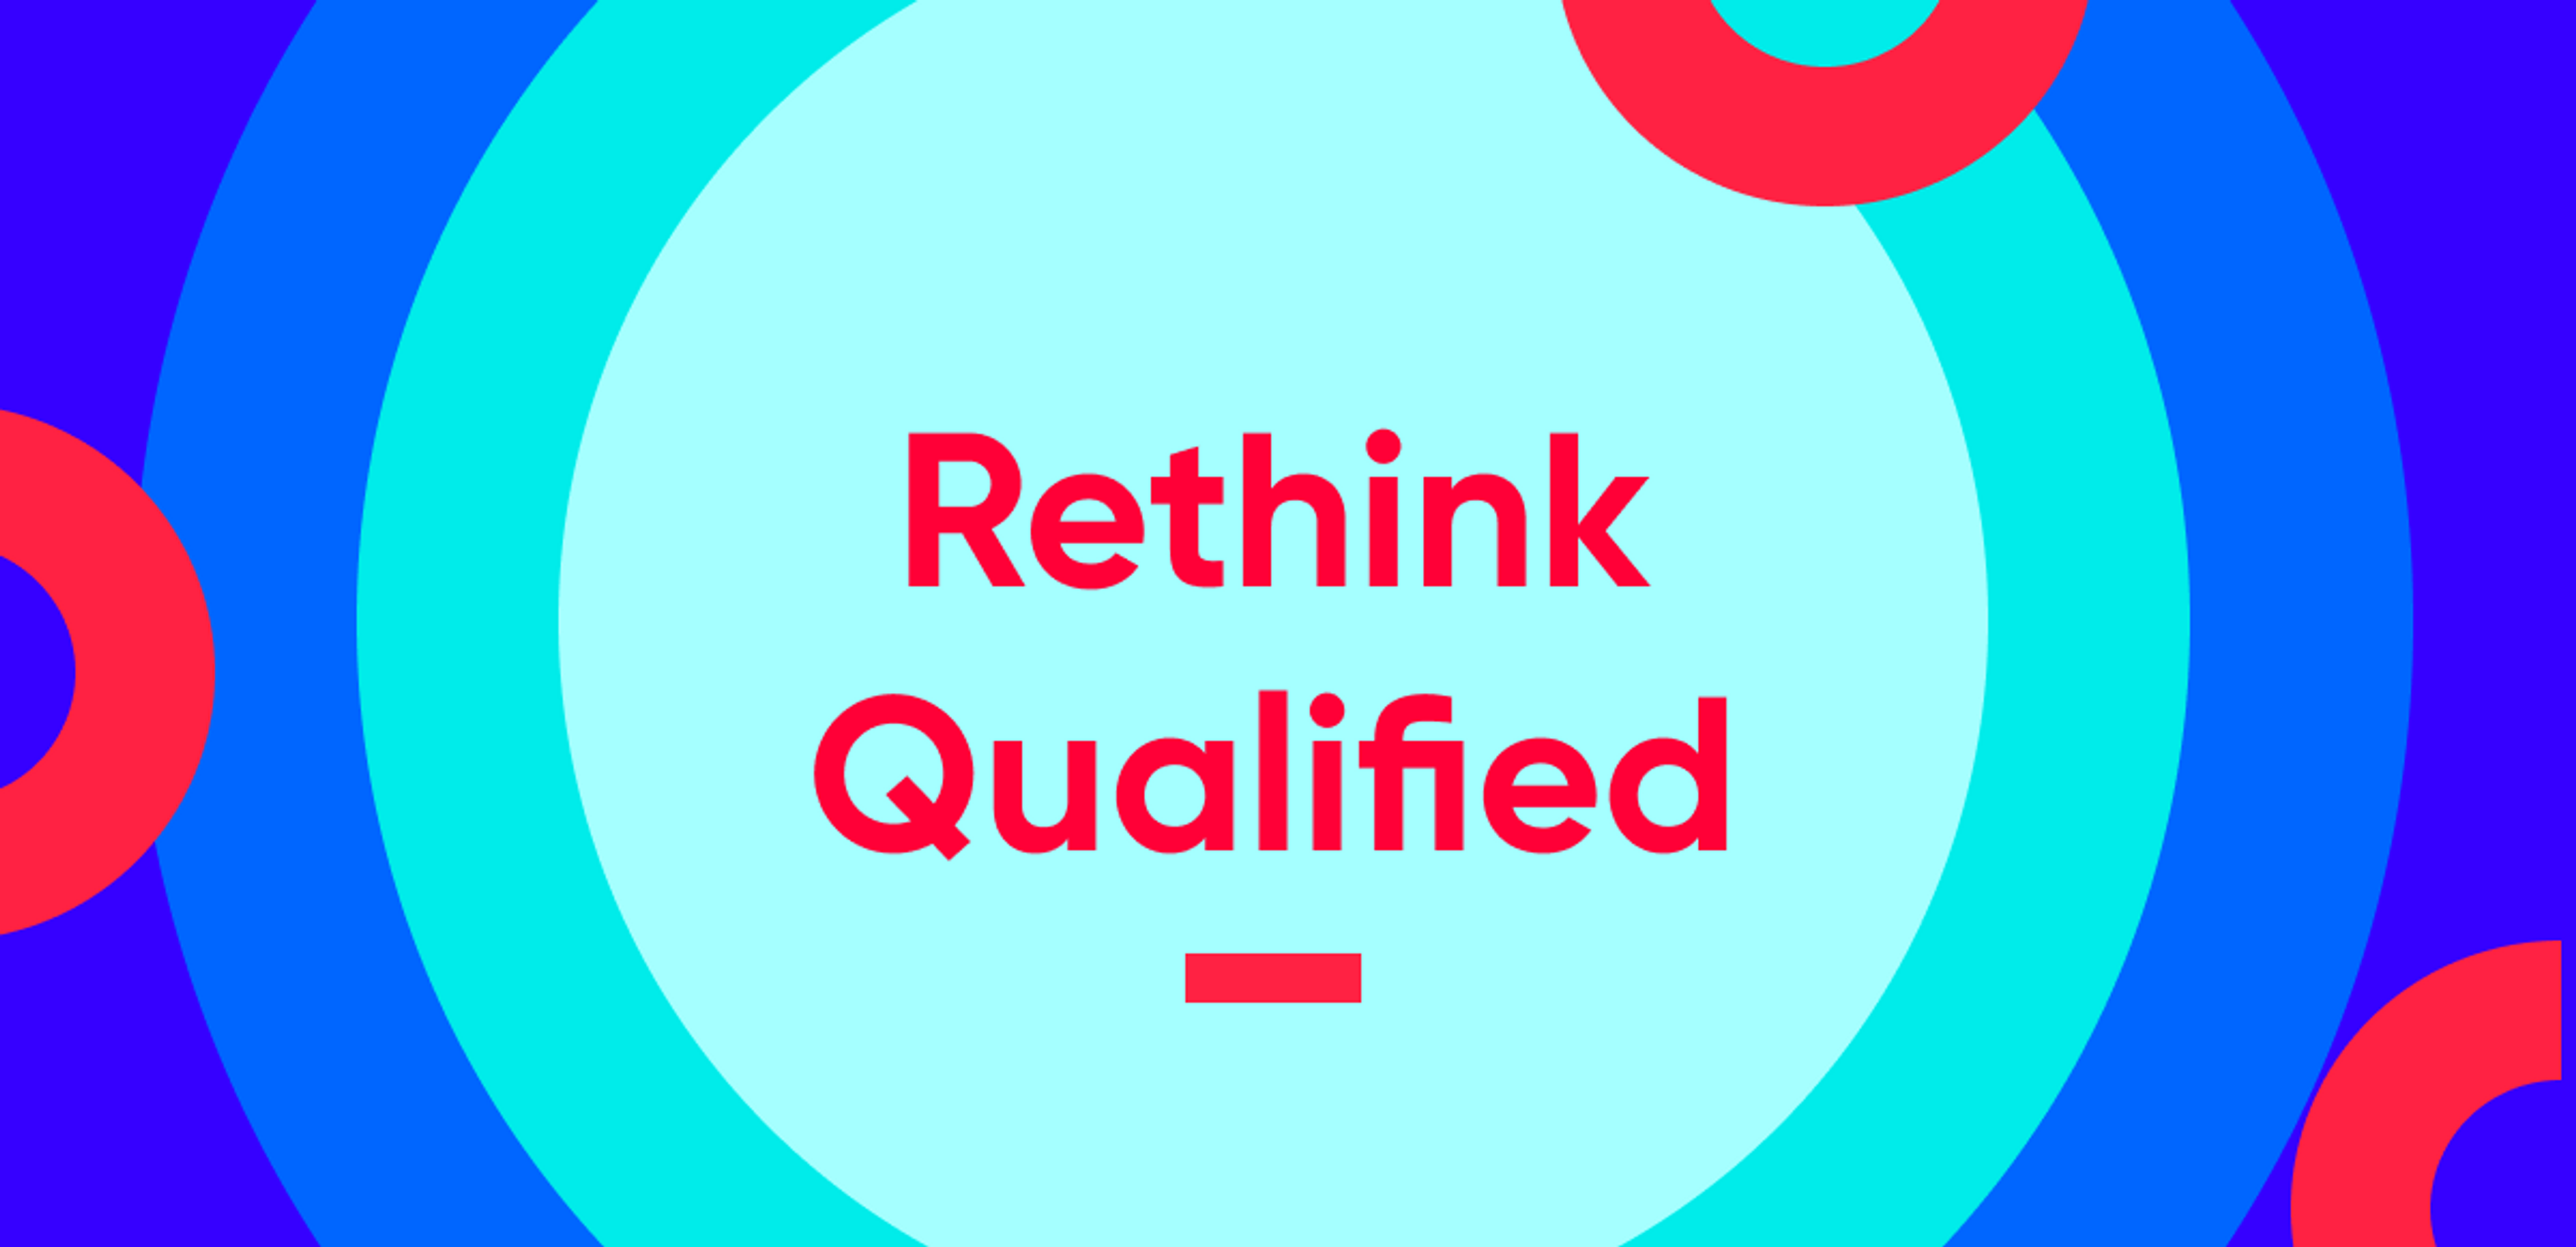 "Rethink Qualified" graphic